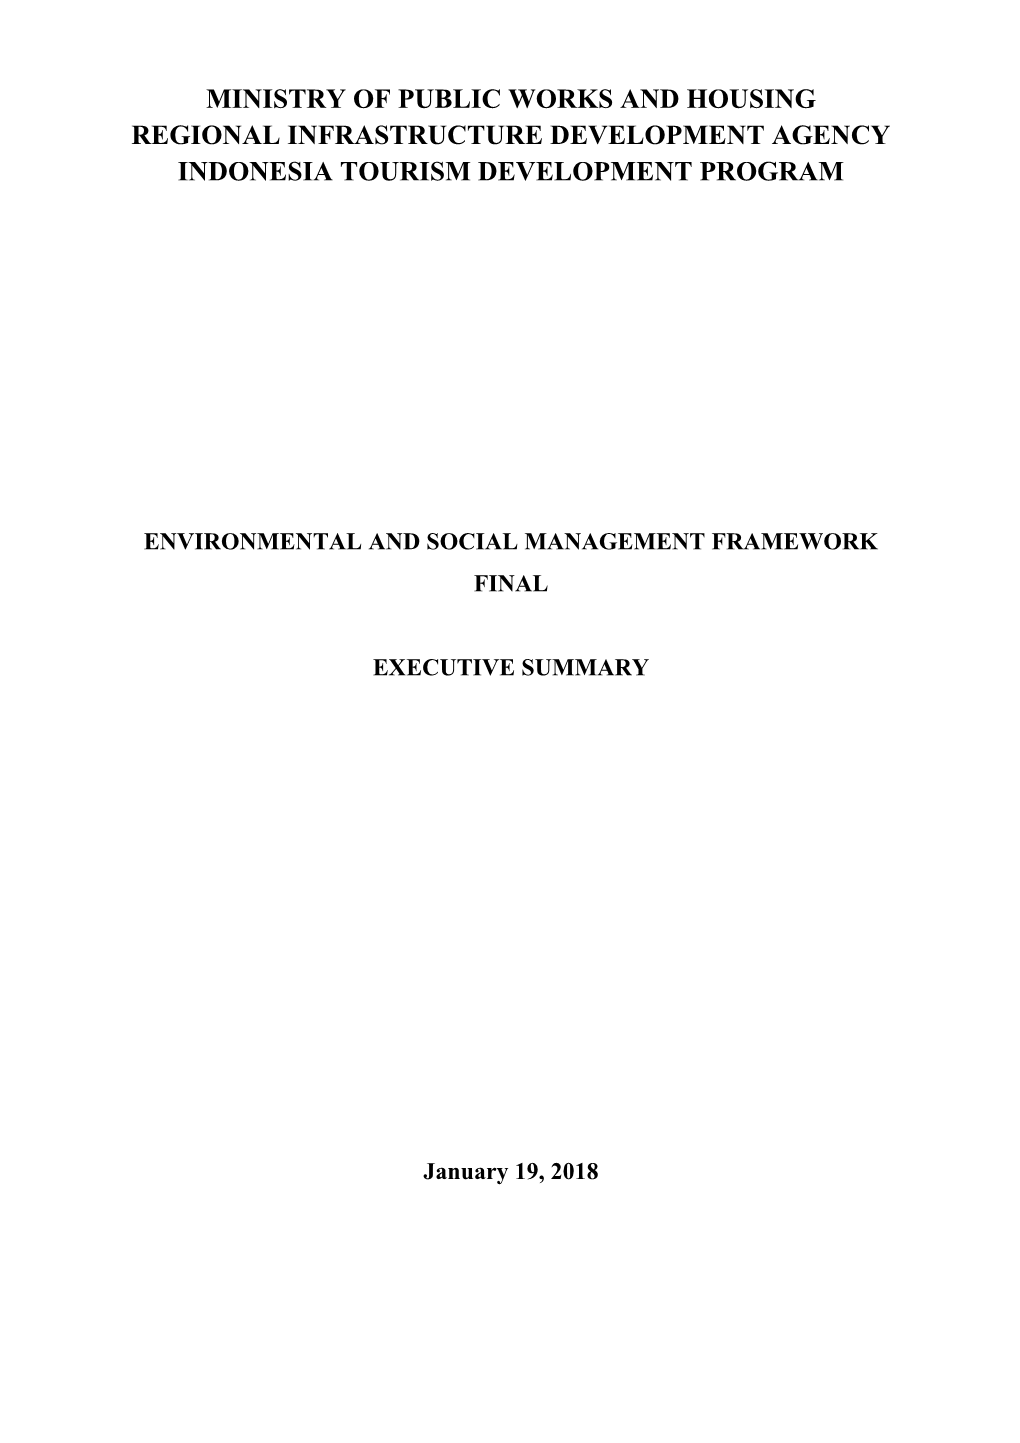 Indonesia - Tourism Development Project - Environmental and Social Management Framework